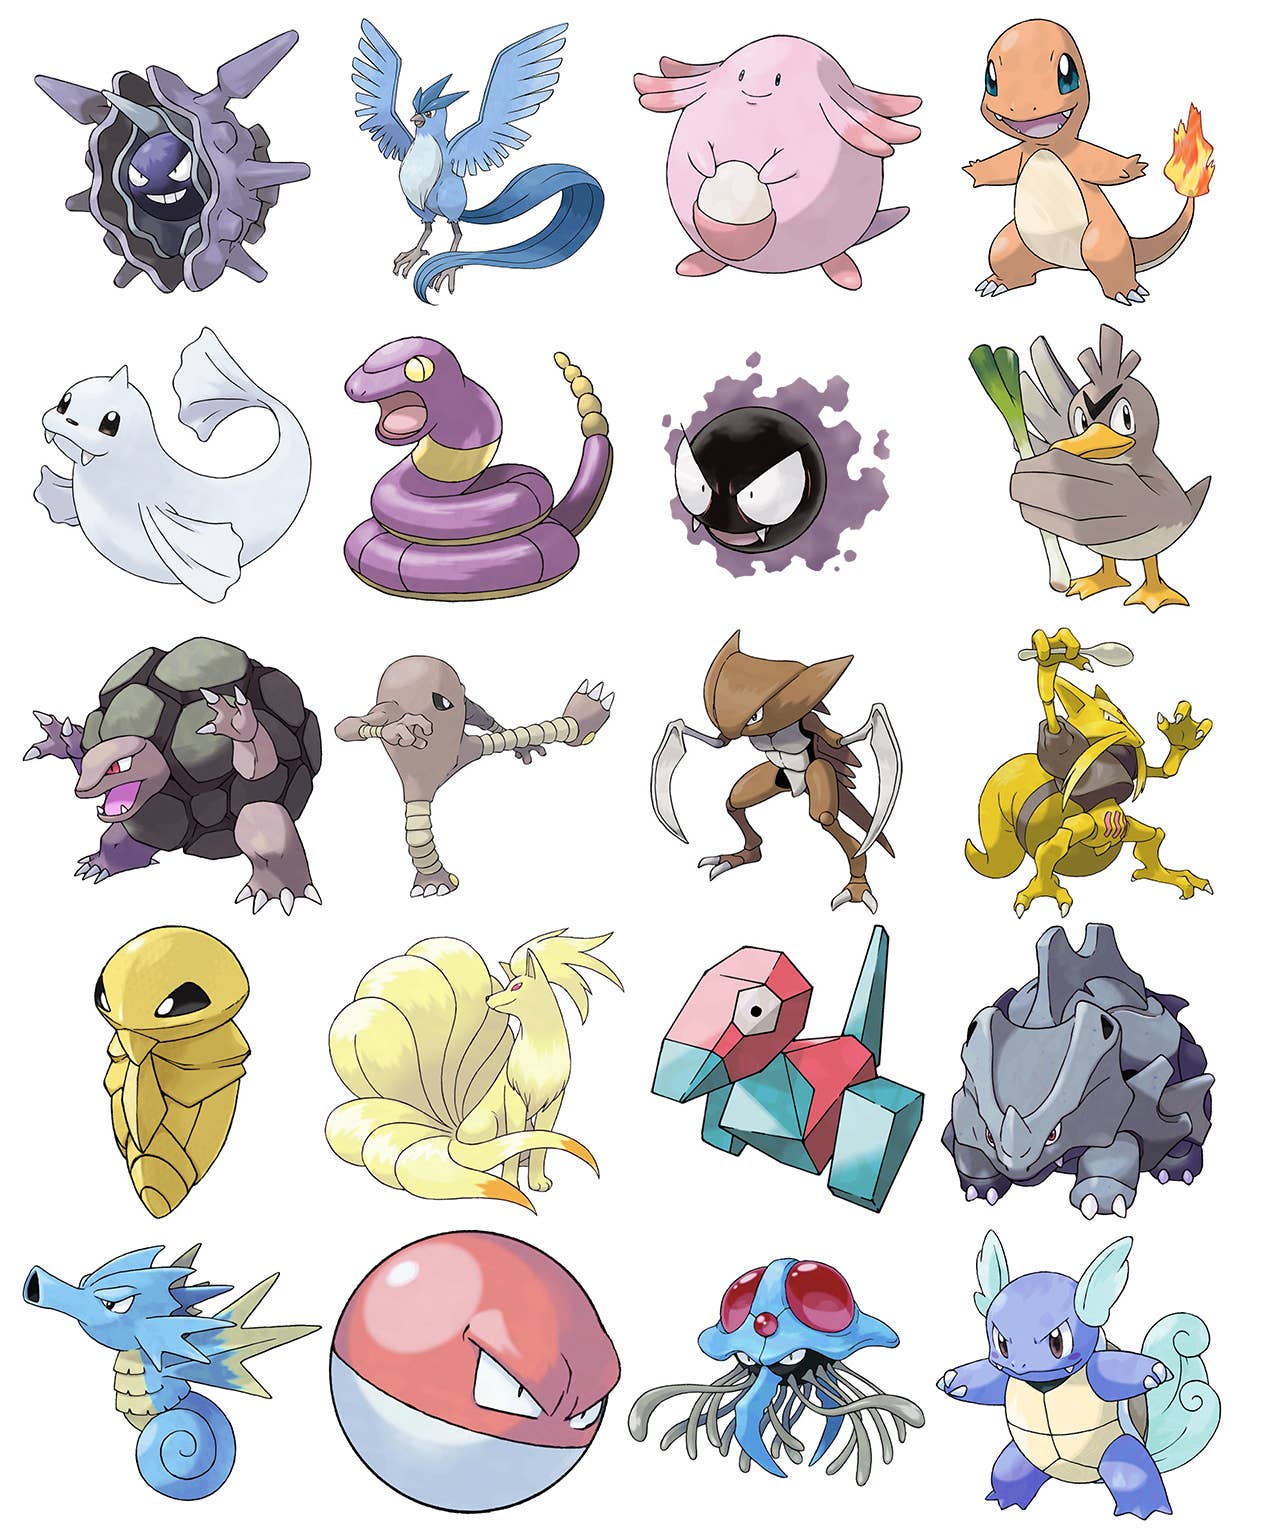 Farfetch'd (Pokémon) - Bulbapedia, the community-driven Pokémon